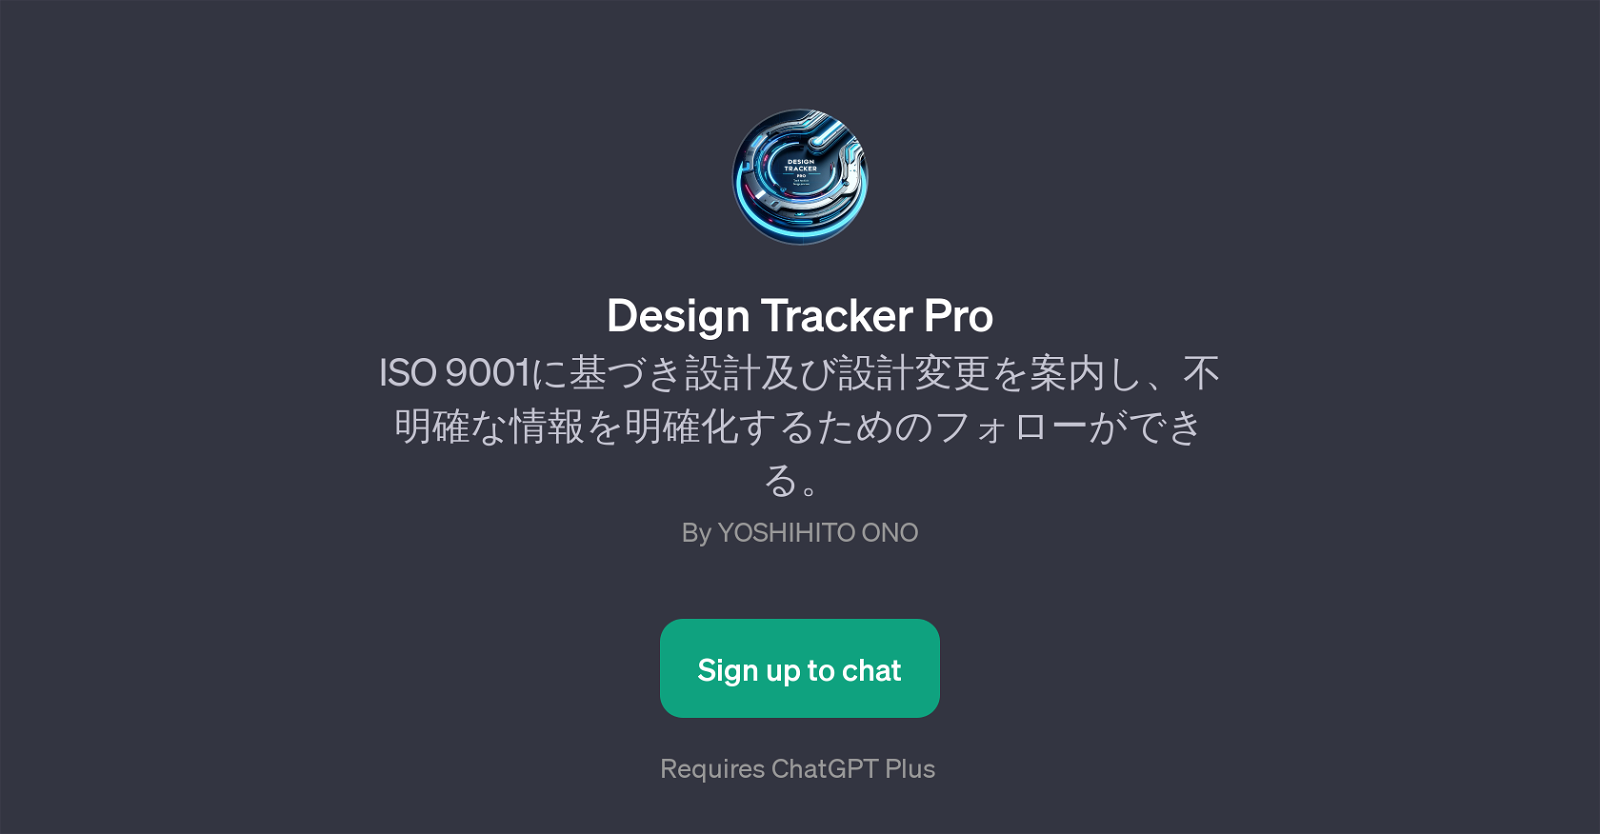 Design Tracker Pro website